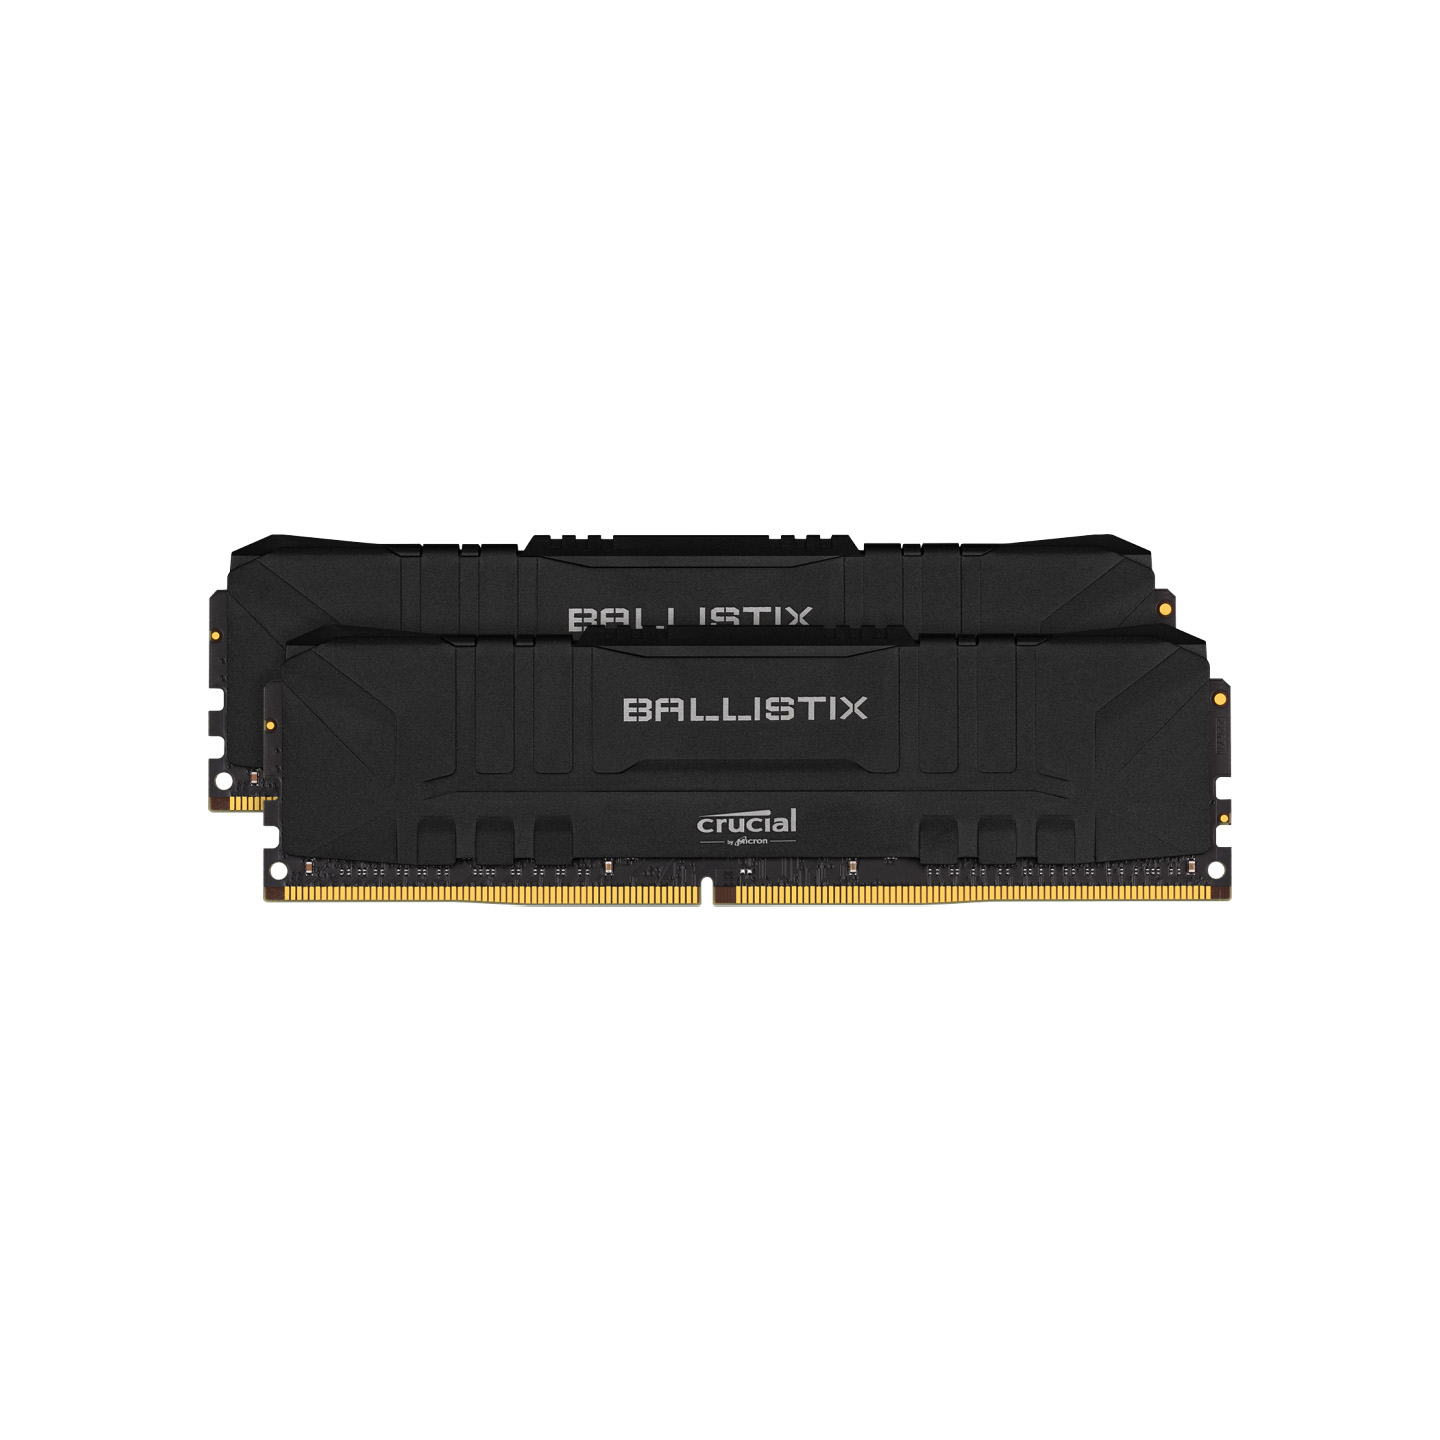 Ballistix Crucial BL2K8G36C16U4B 2x8GB (16GB Kit) DDR4 3600MT/s CL16 Unbuffered DIMM 288pin Black RGB RAM